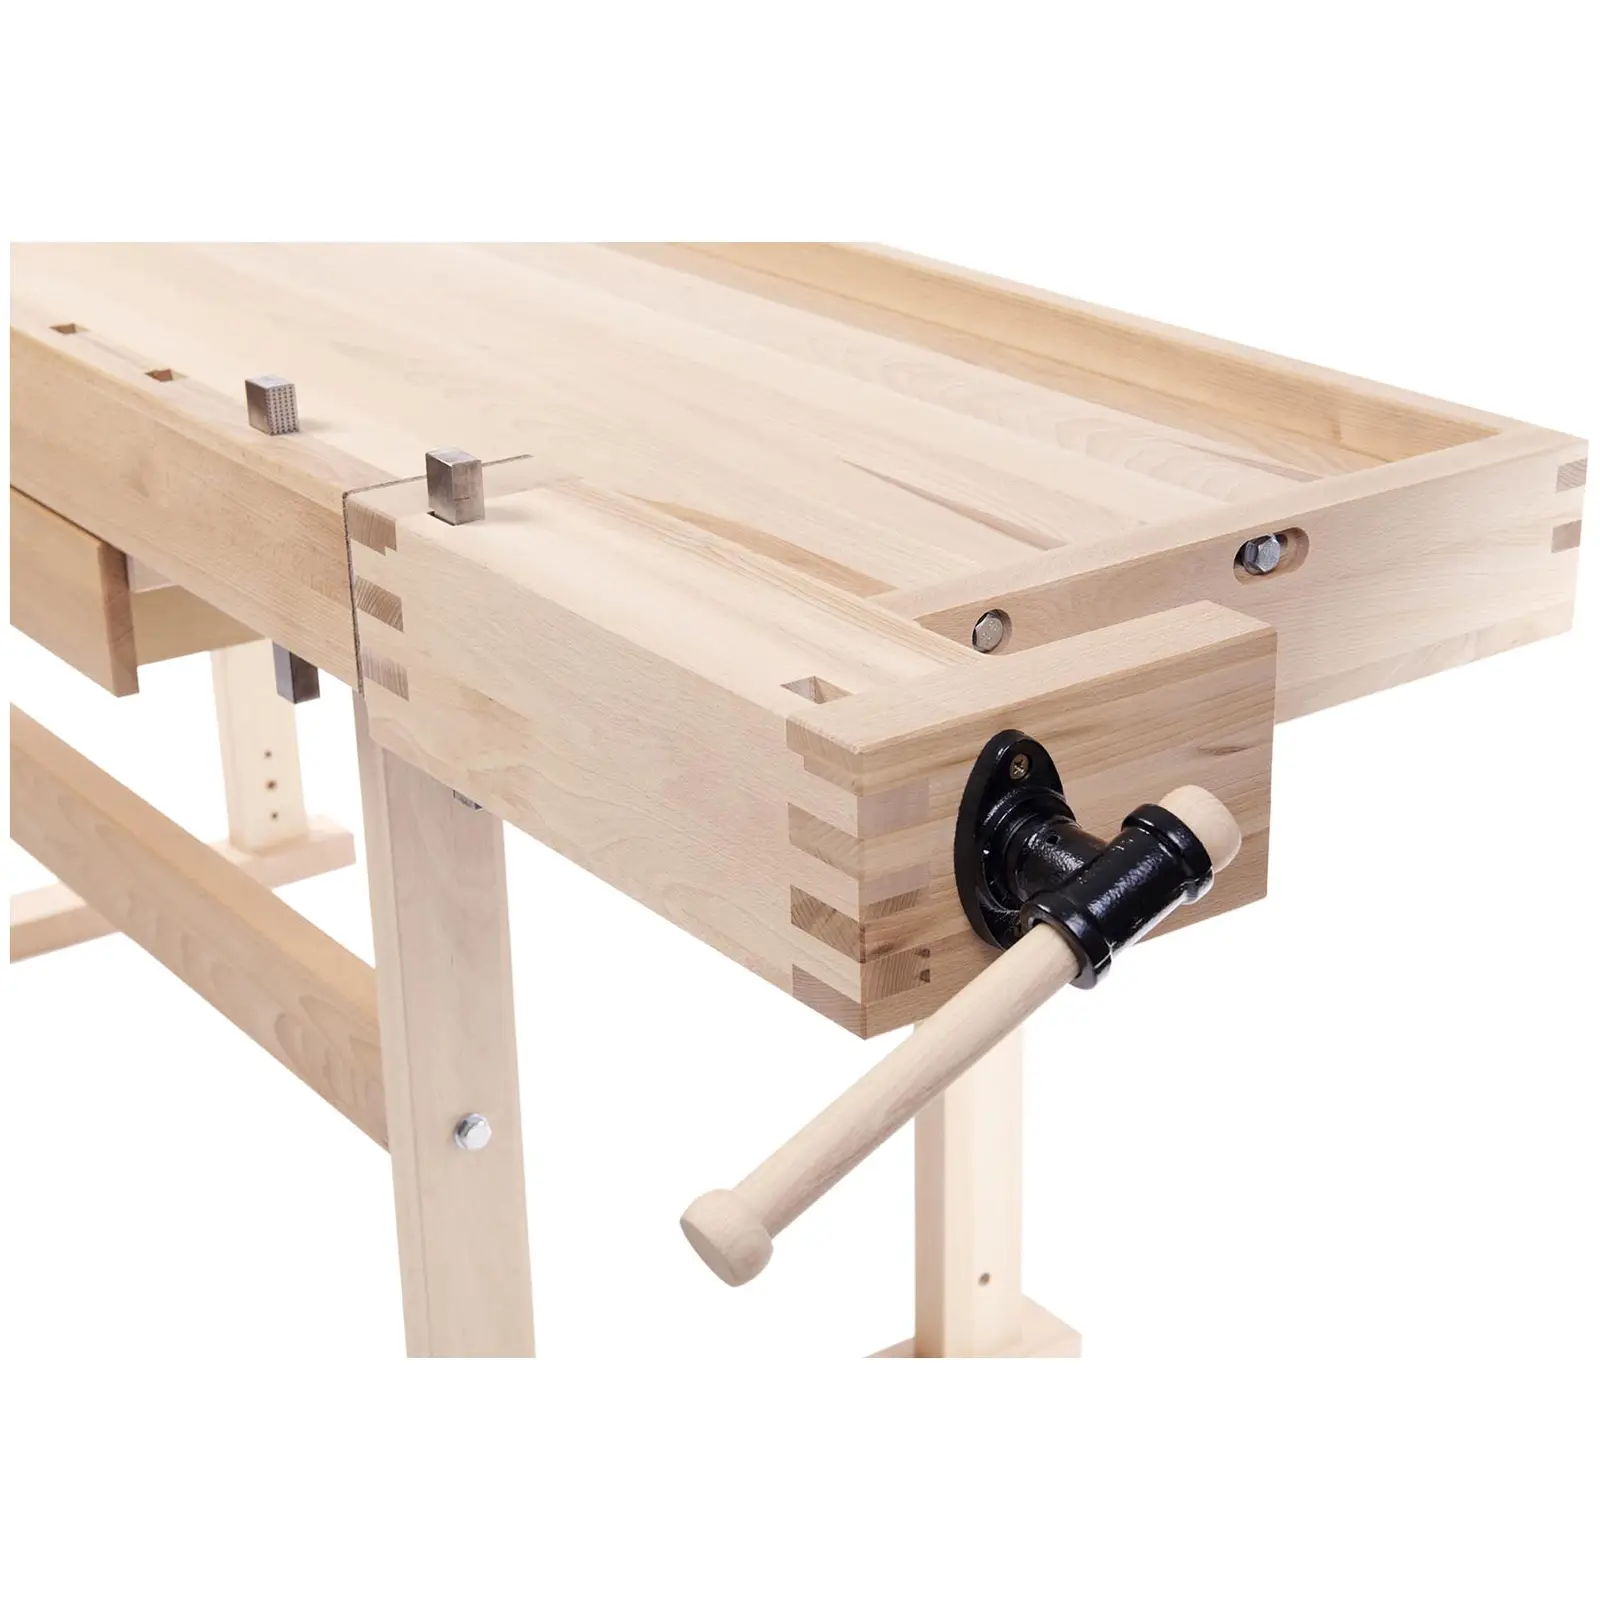 Workbench - beech wood - 2 vices - 2,120 x 760 mm worktop